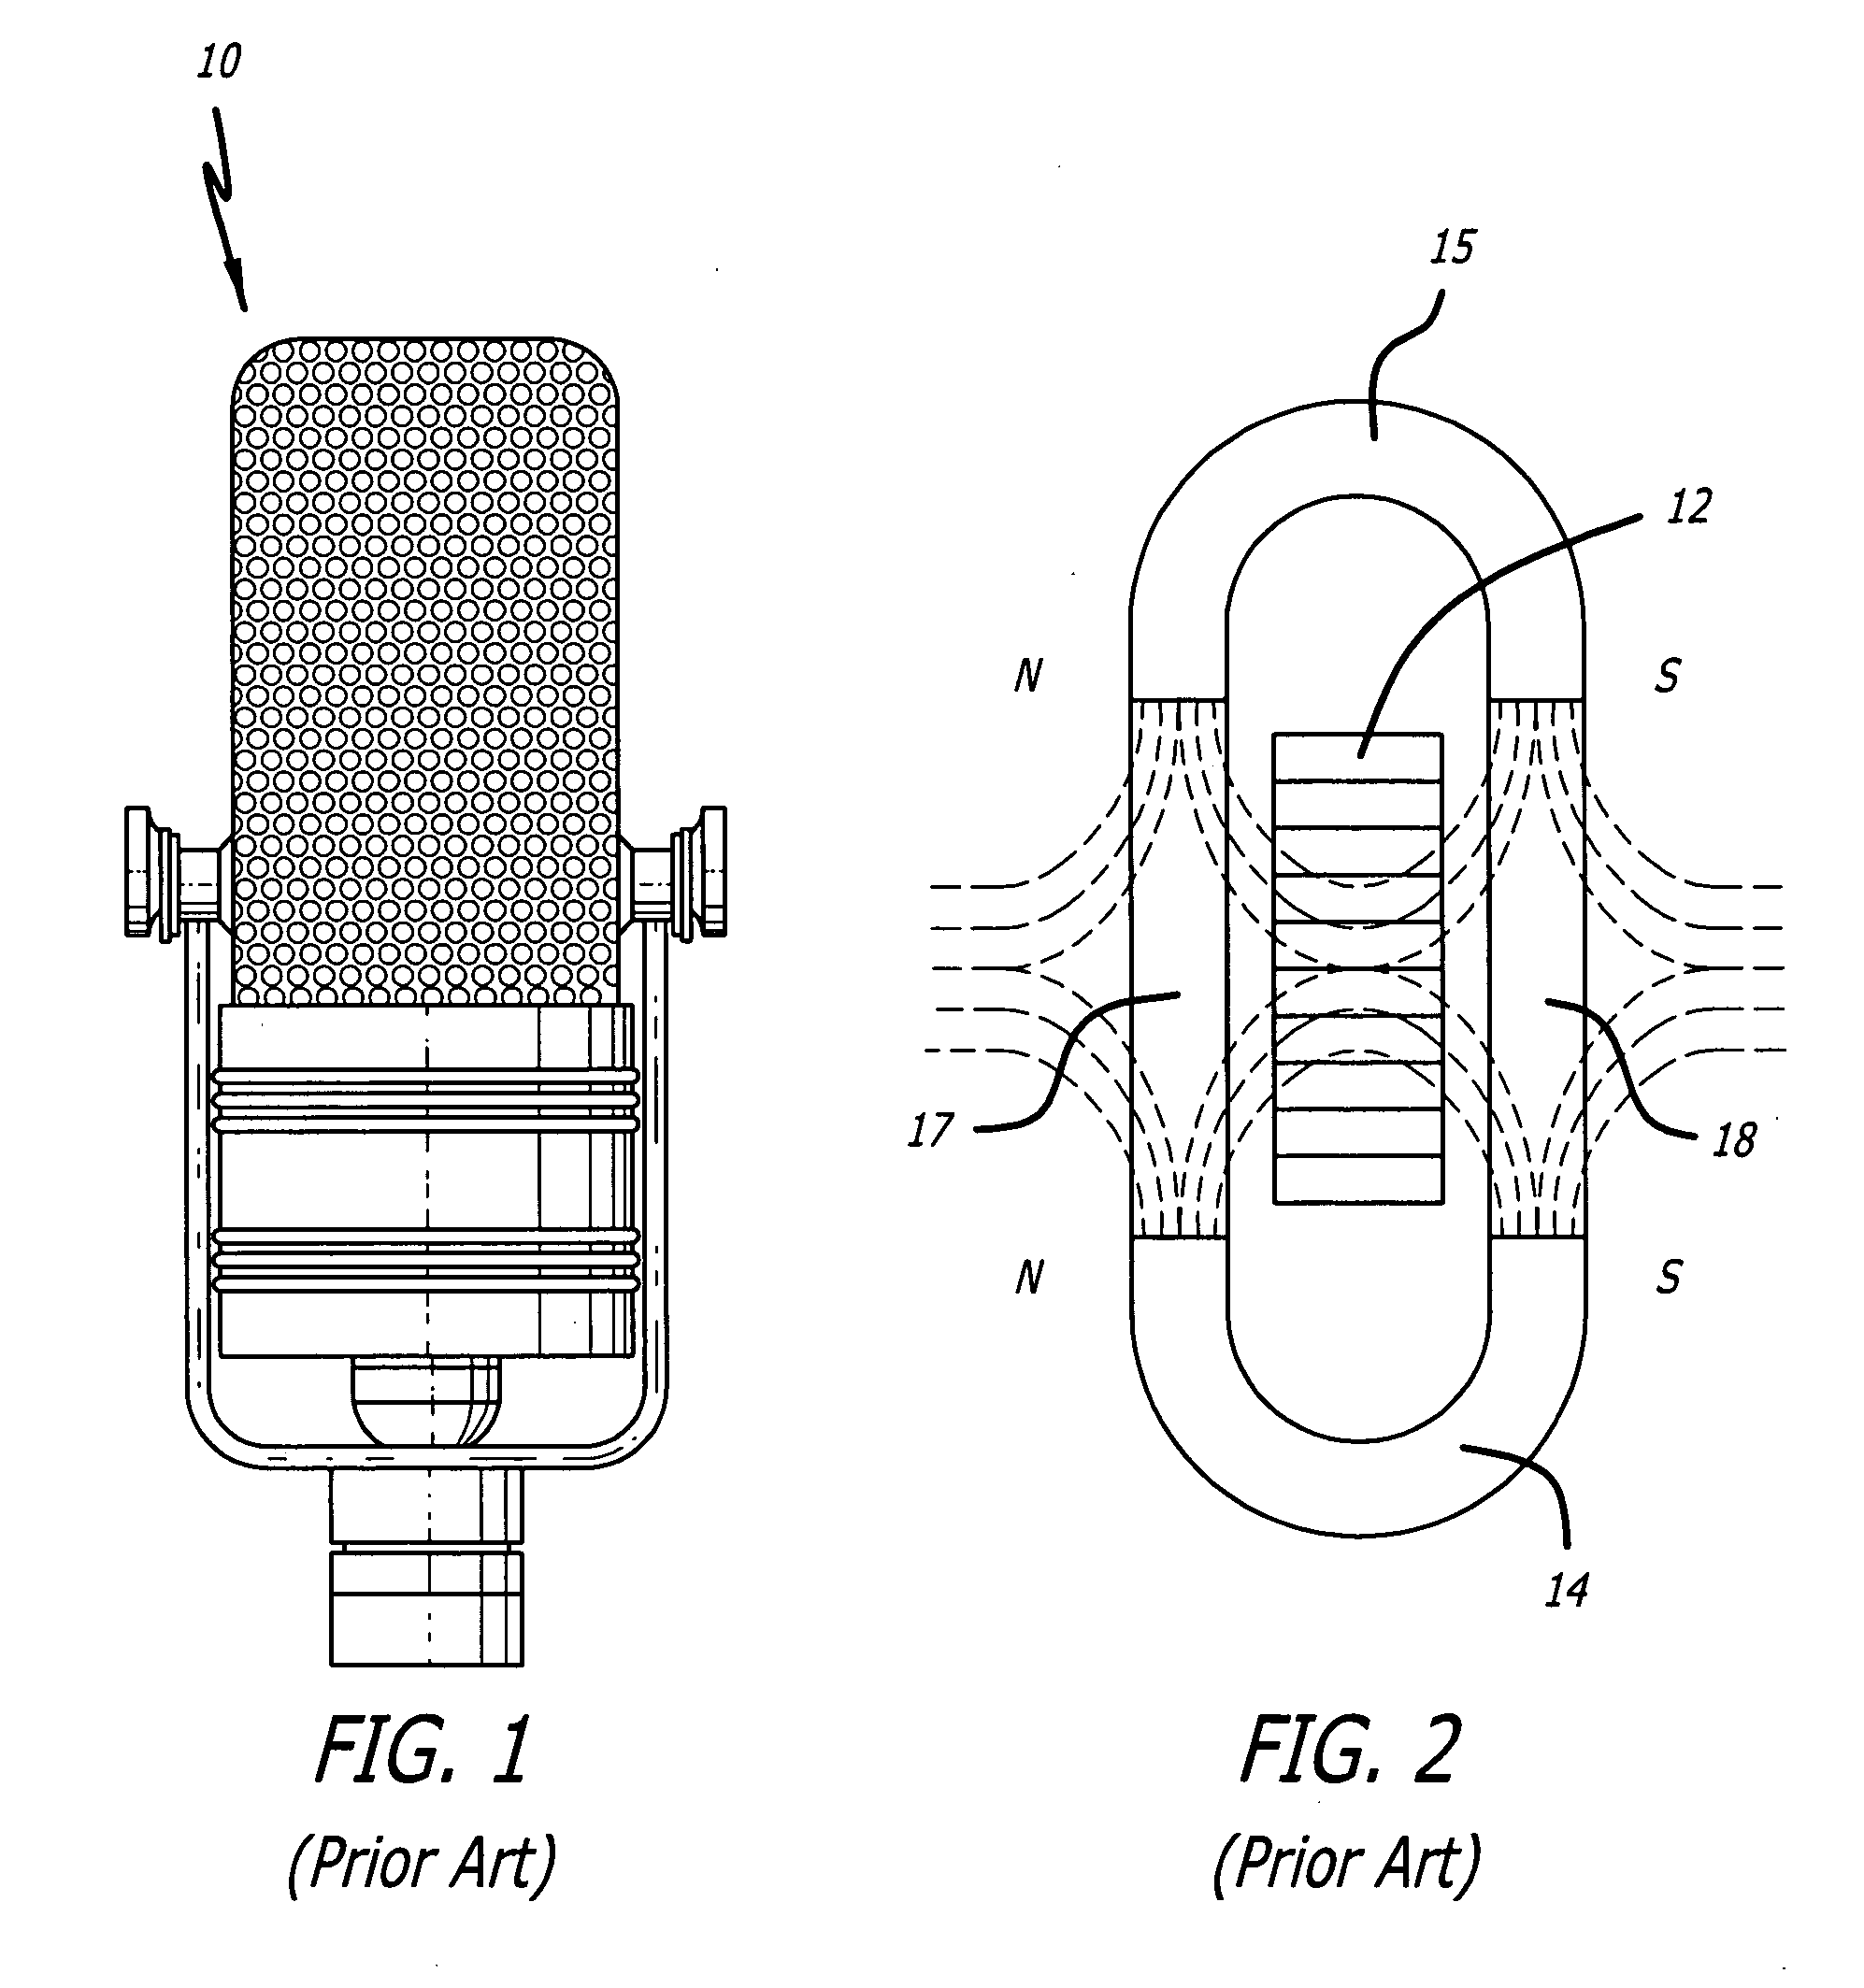 Ribbon-microphone transducer